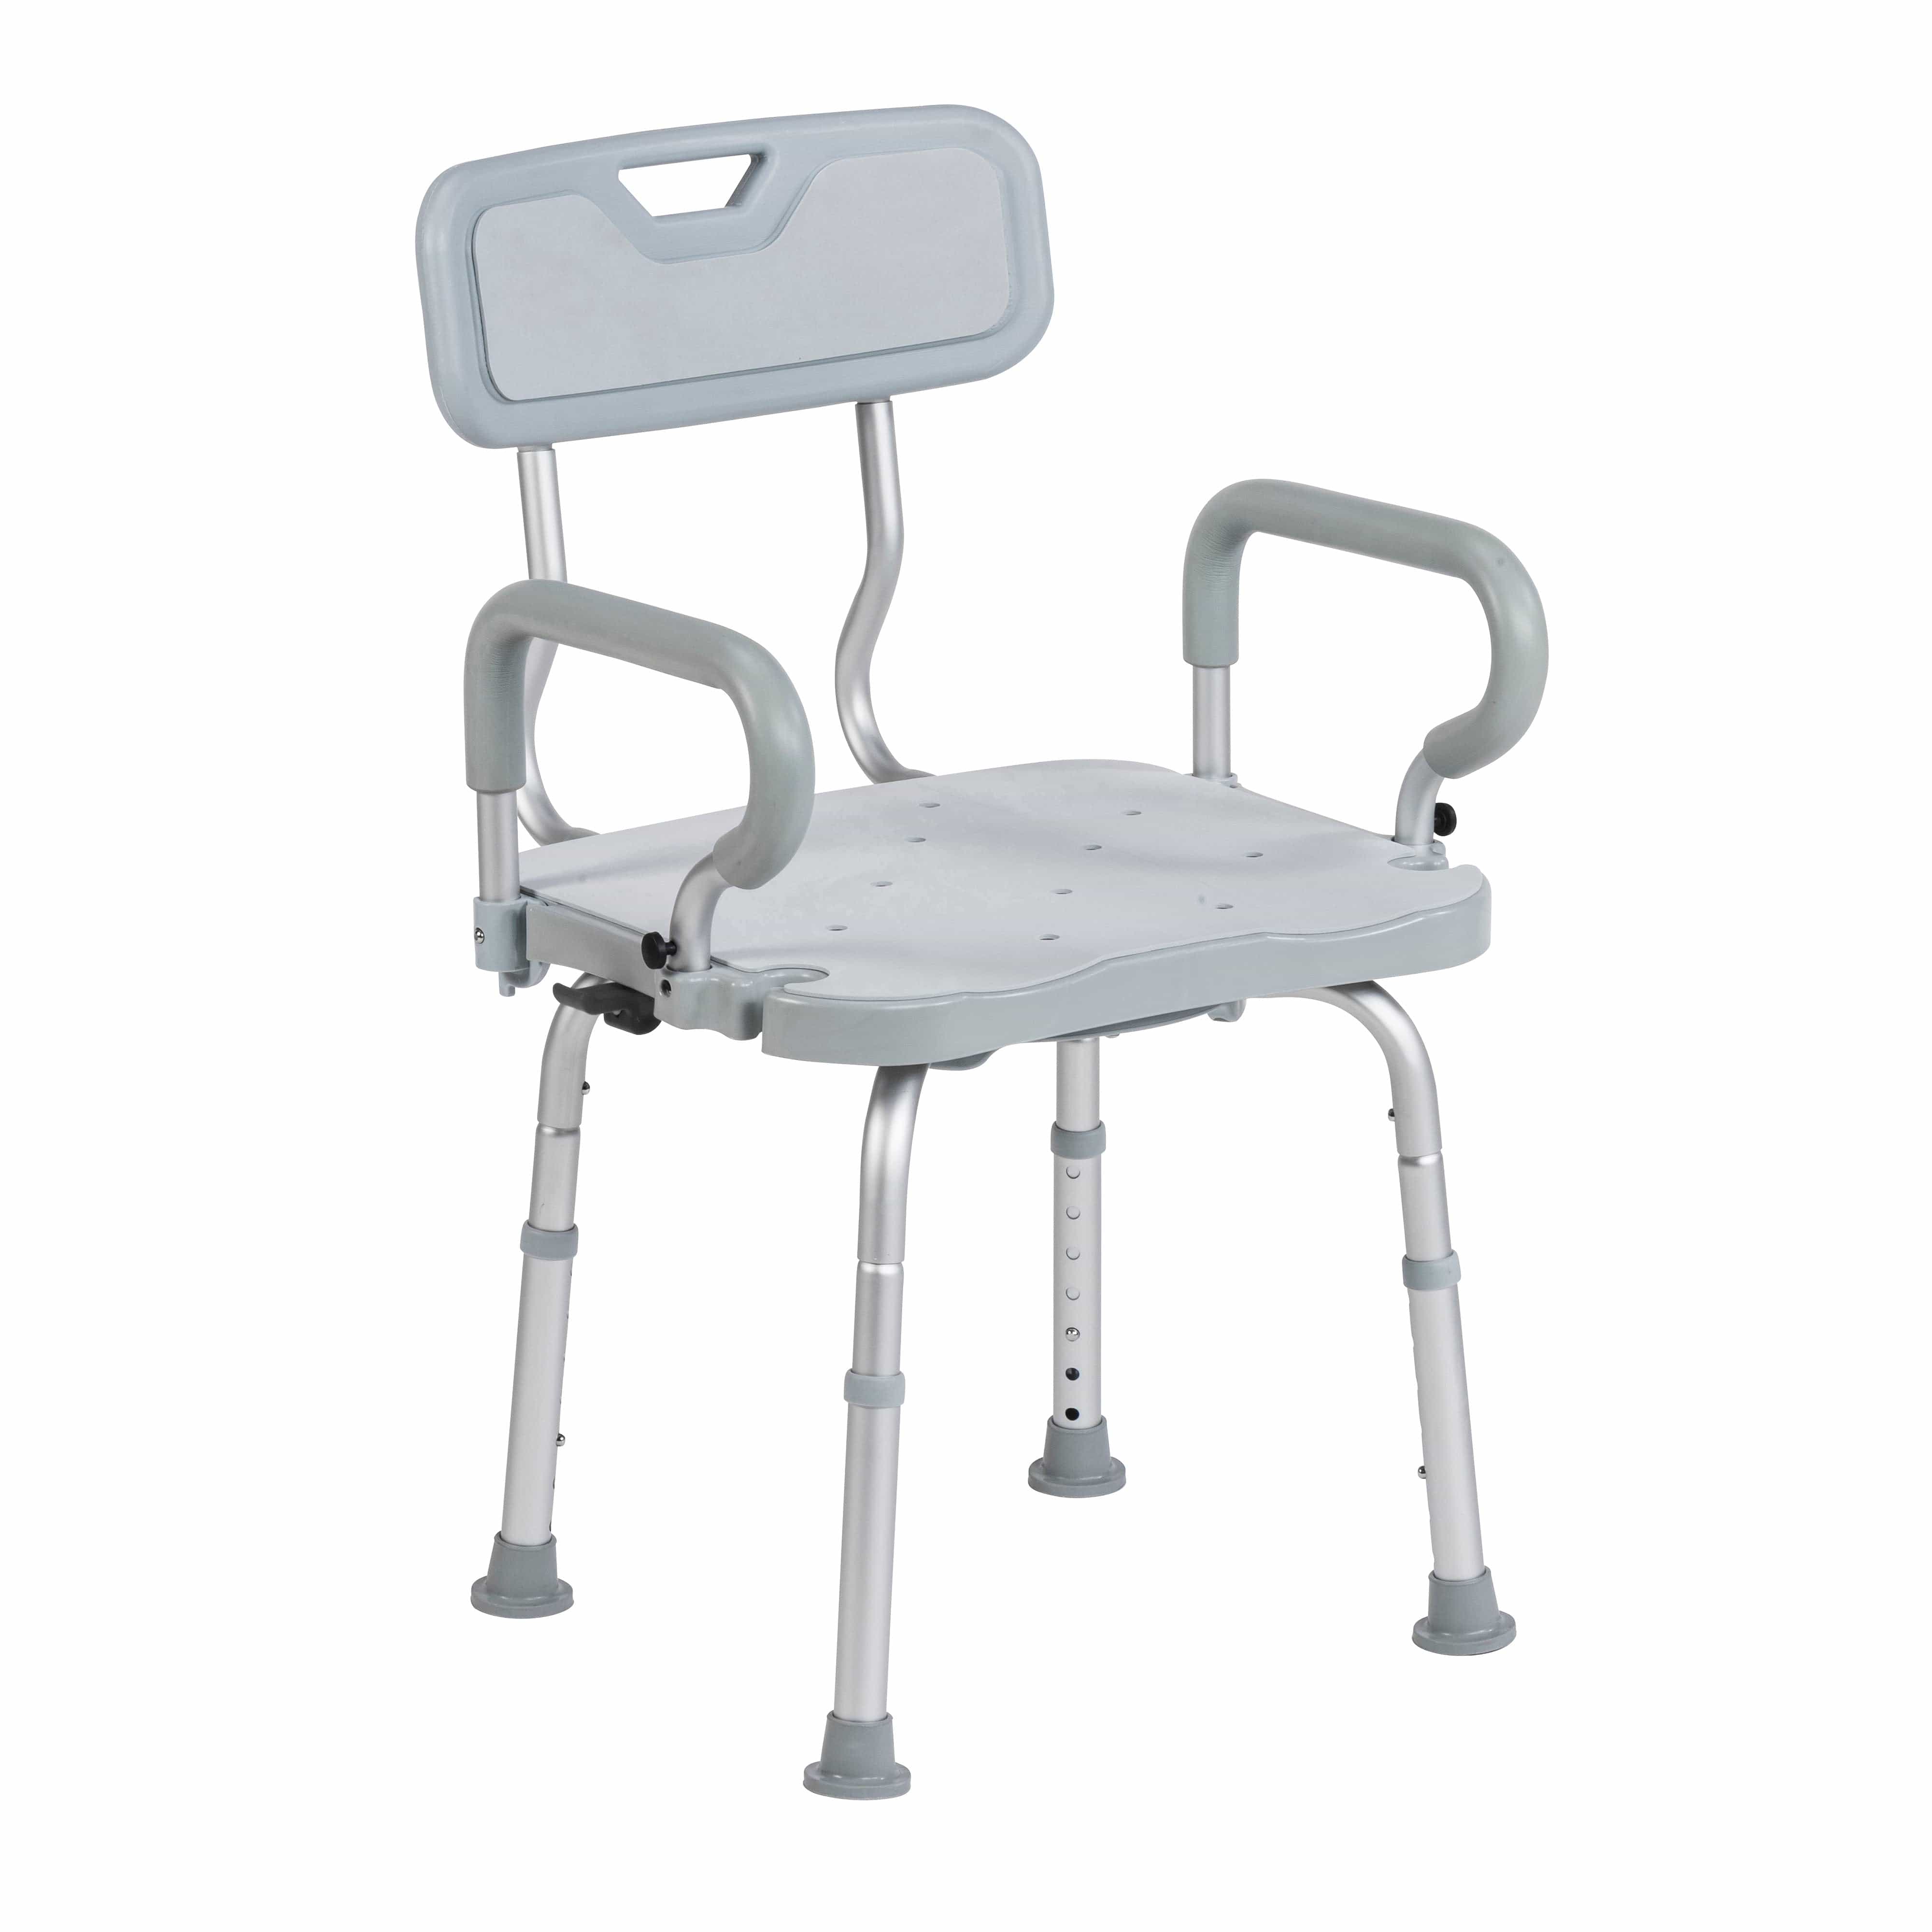 Drive Medical Drive Medical PreserveTech 360 Degrees Swivel Bath Chair rtl12a001-gr